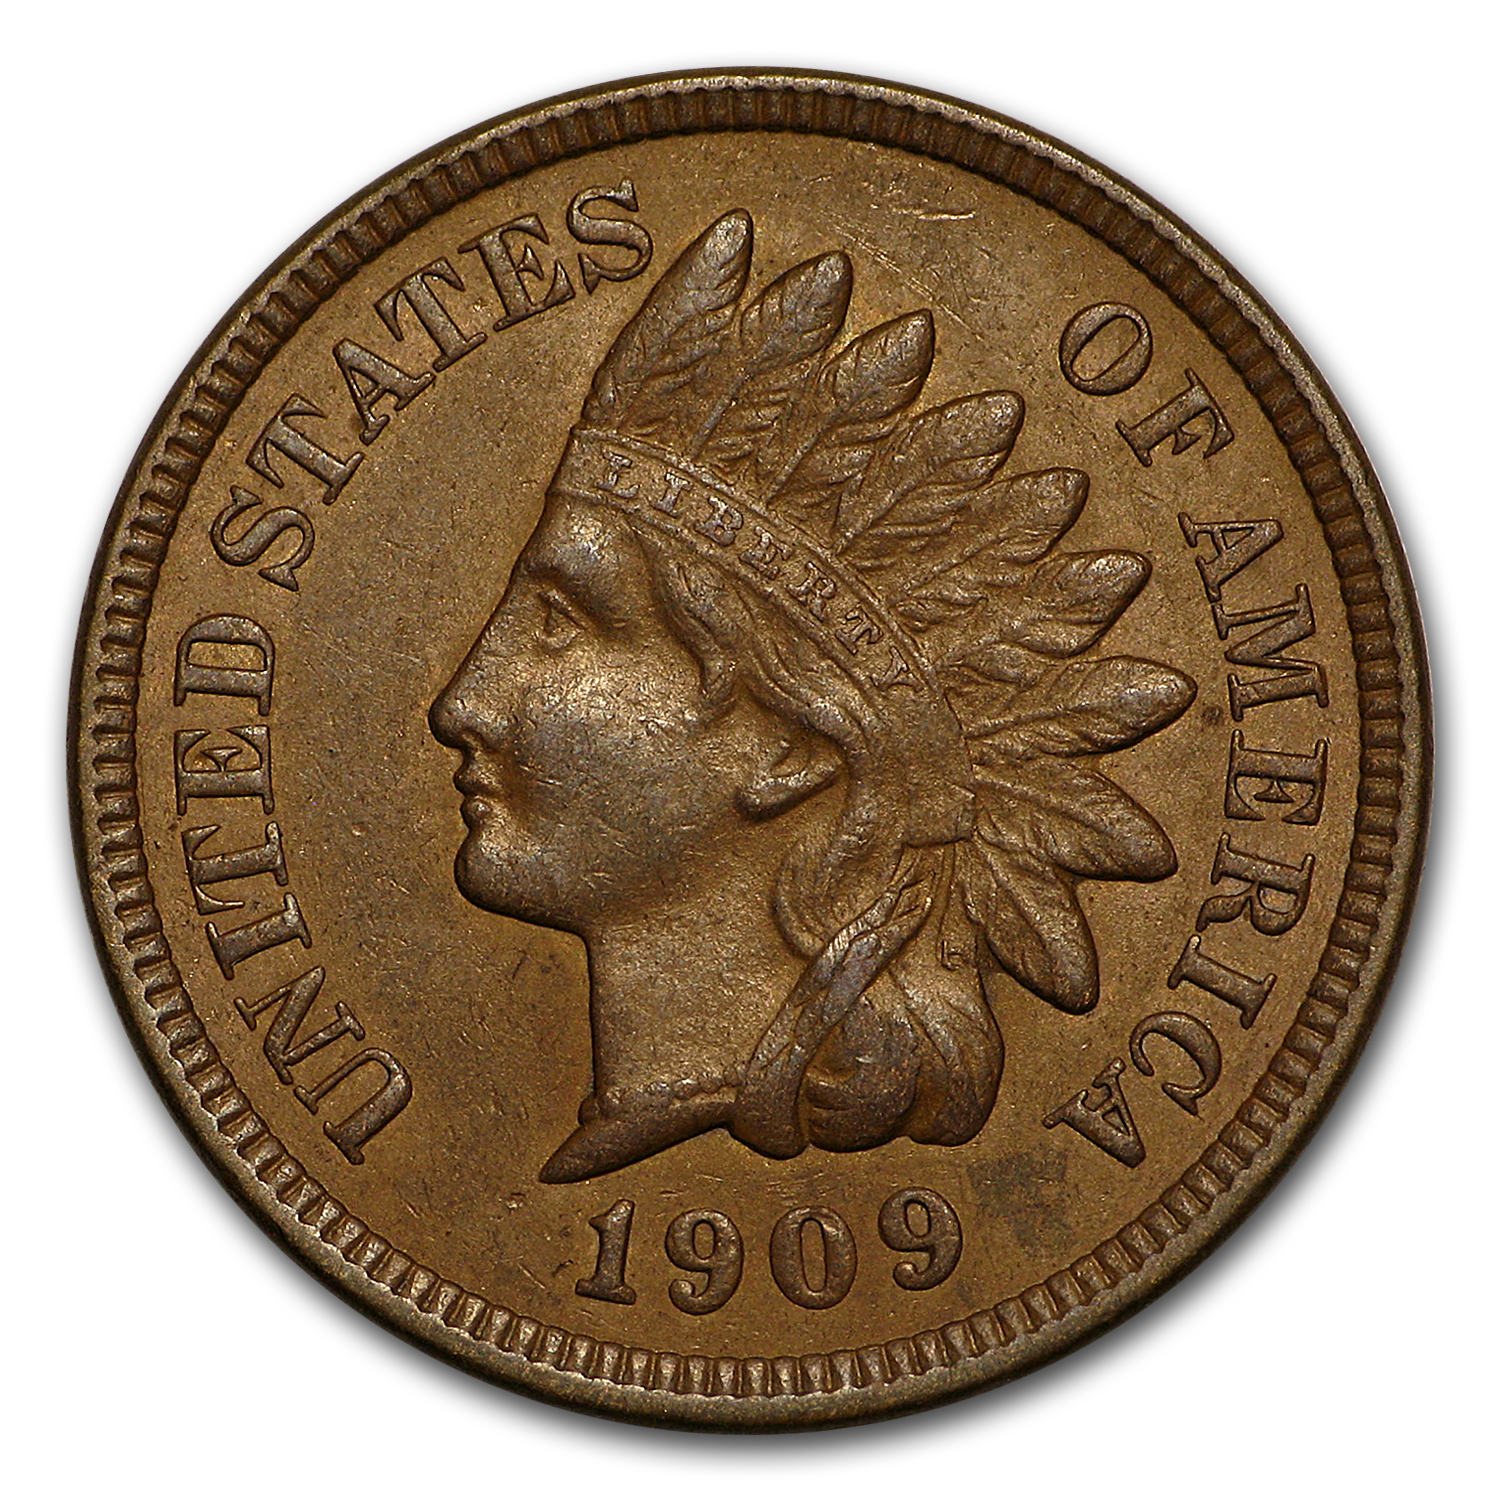 Buy 1909 Indian Head Cent AU